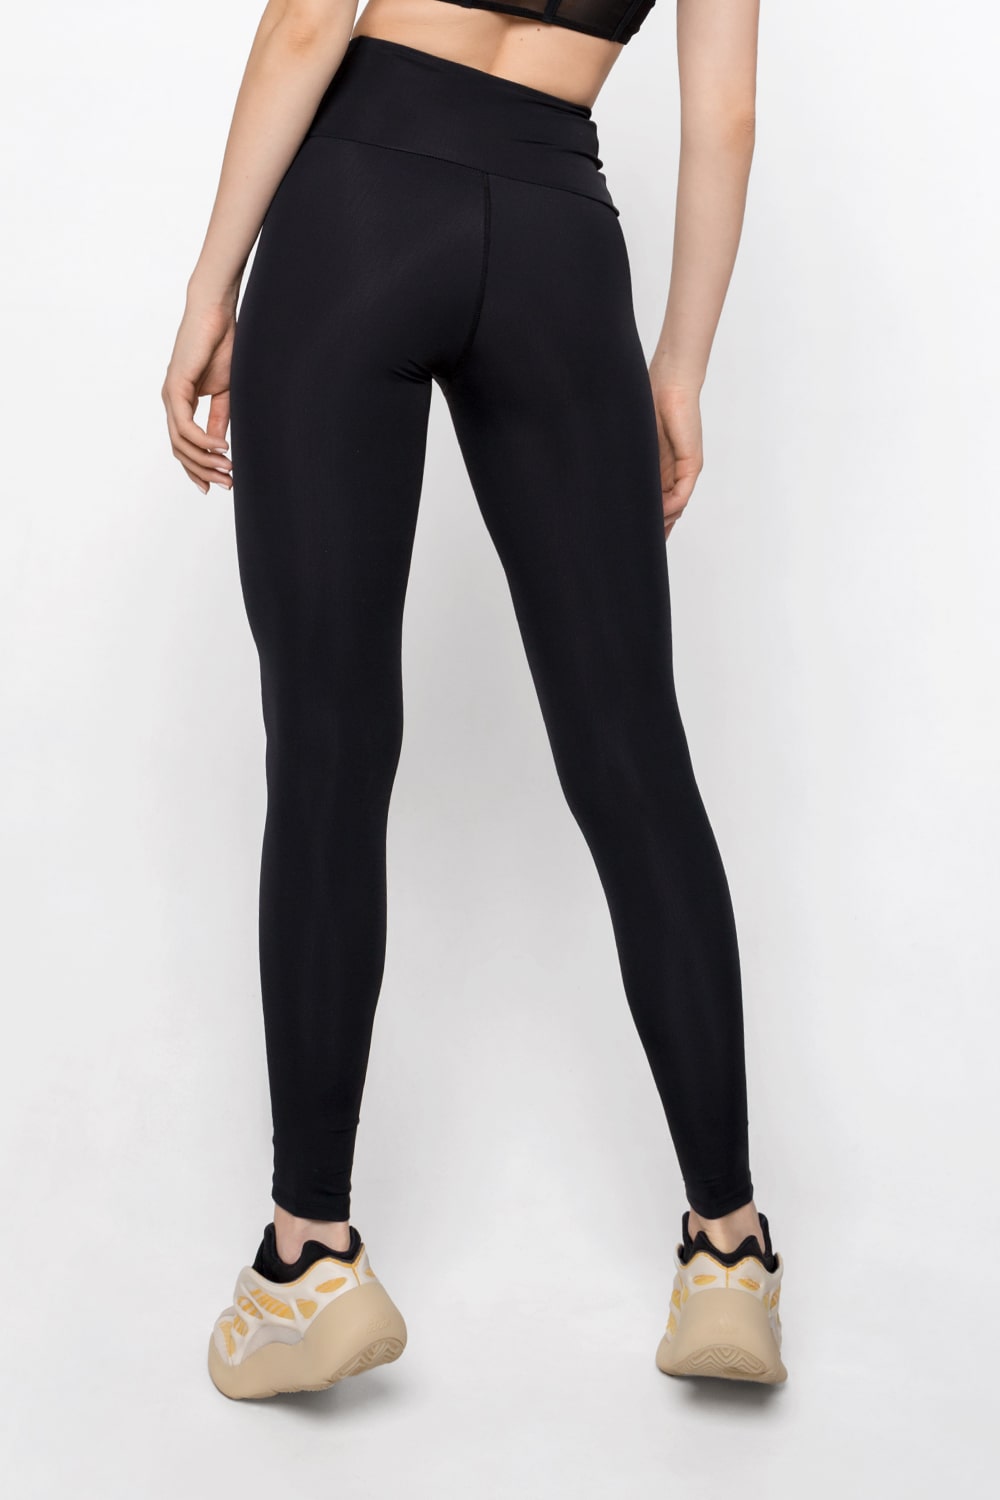 Hot girl sexy black transparent leggings for women CP1003